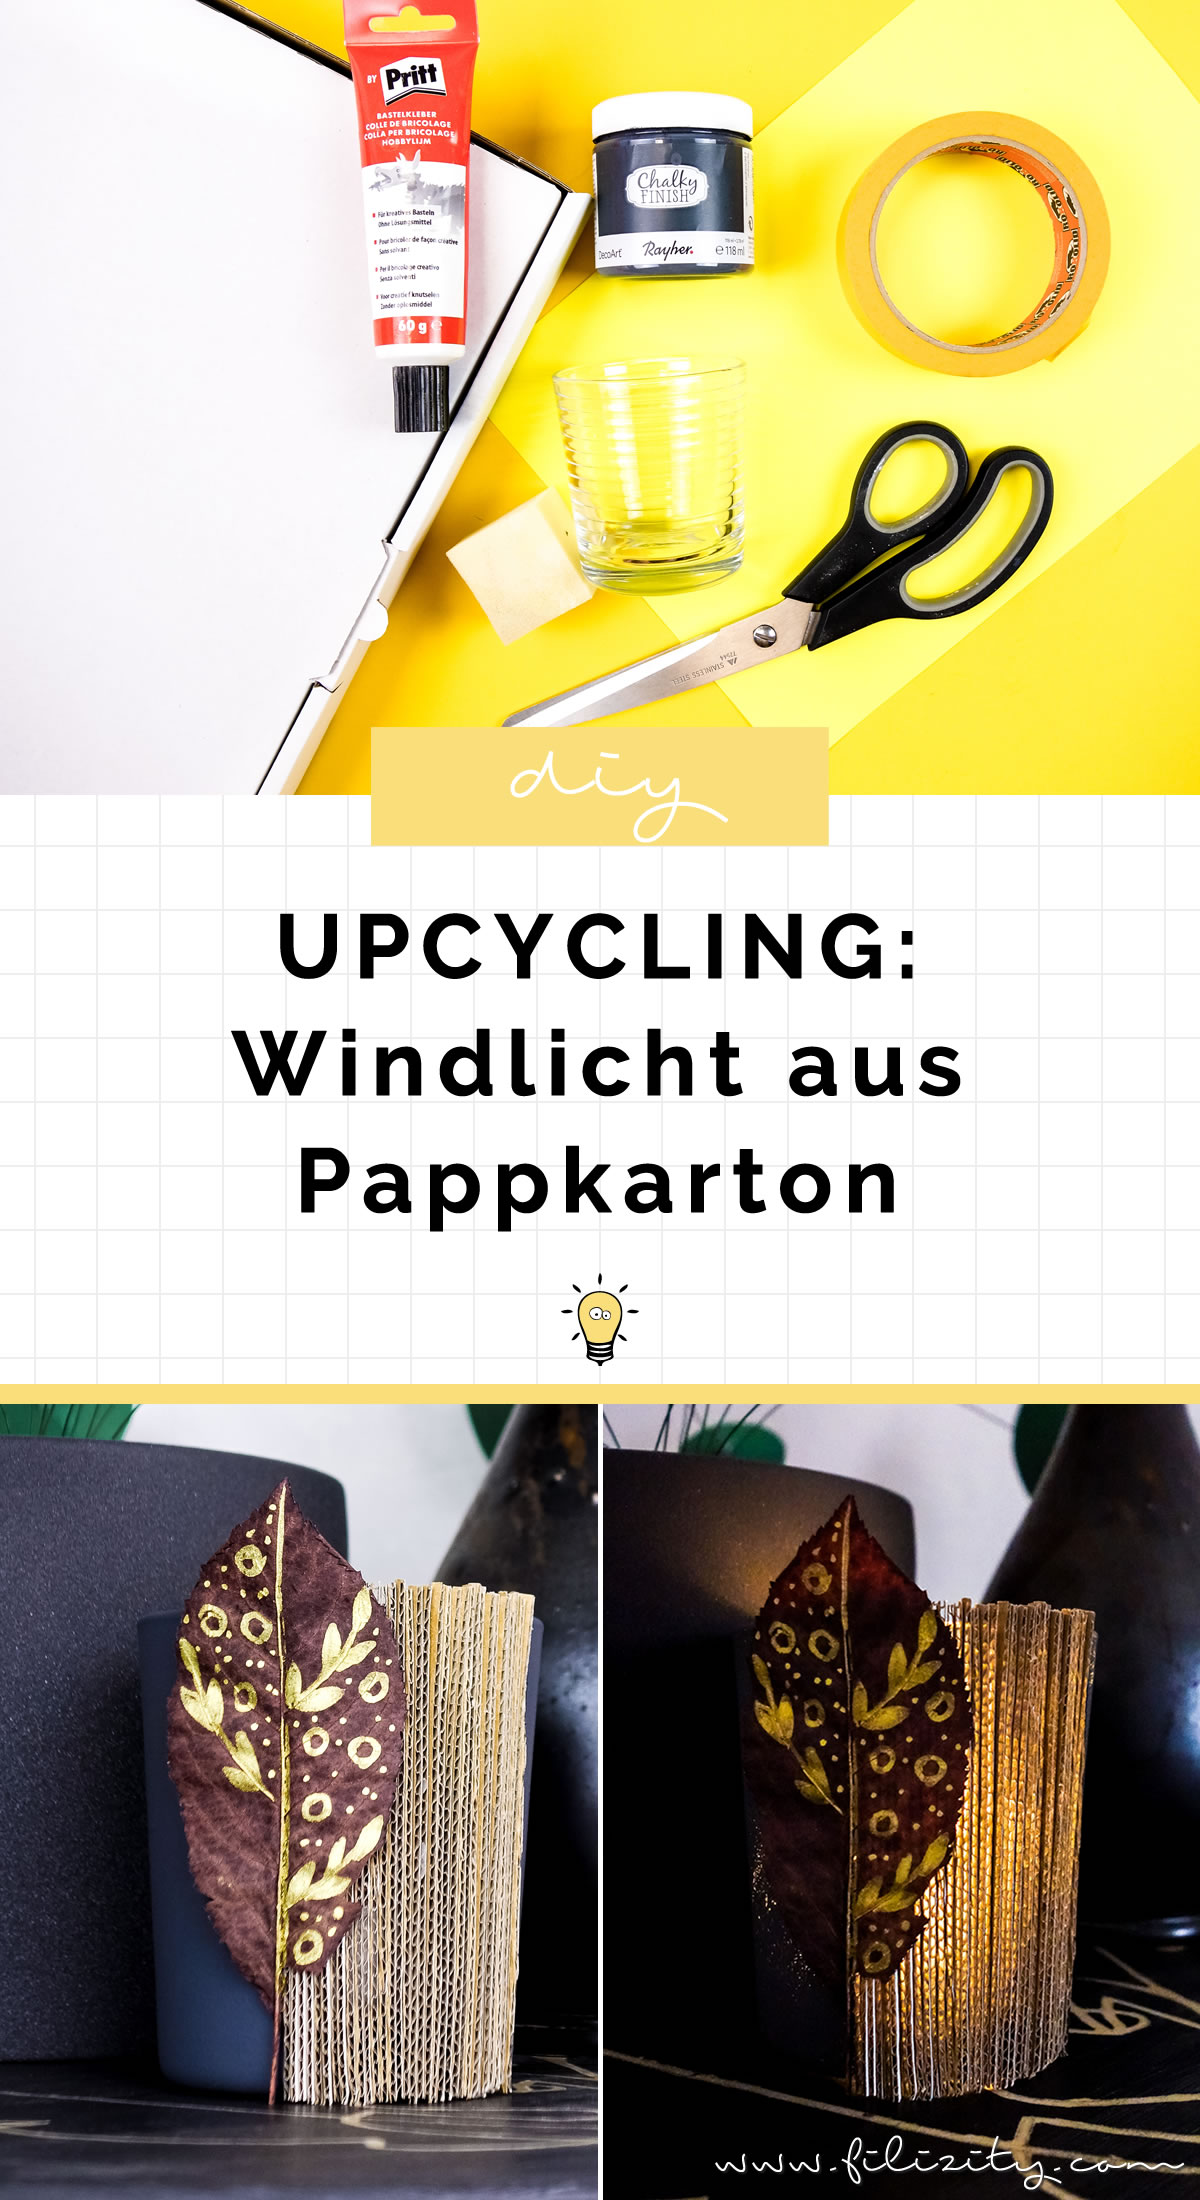 Upcycling: DIY Windlicht aus Pappkarton basteln - 5 Blogs 1000 Ideen | Filizity.com - DIY Blog aus Rheinland #herbst #upcycling #5Blogs1000Ideen